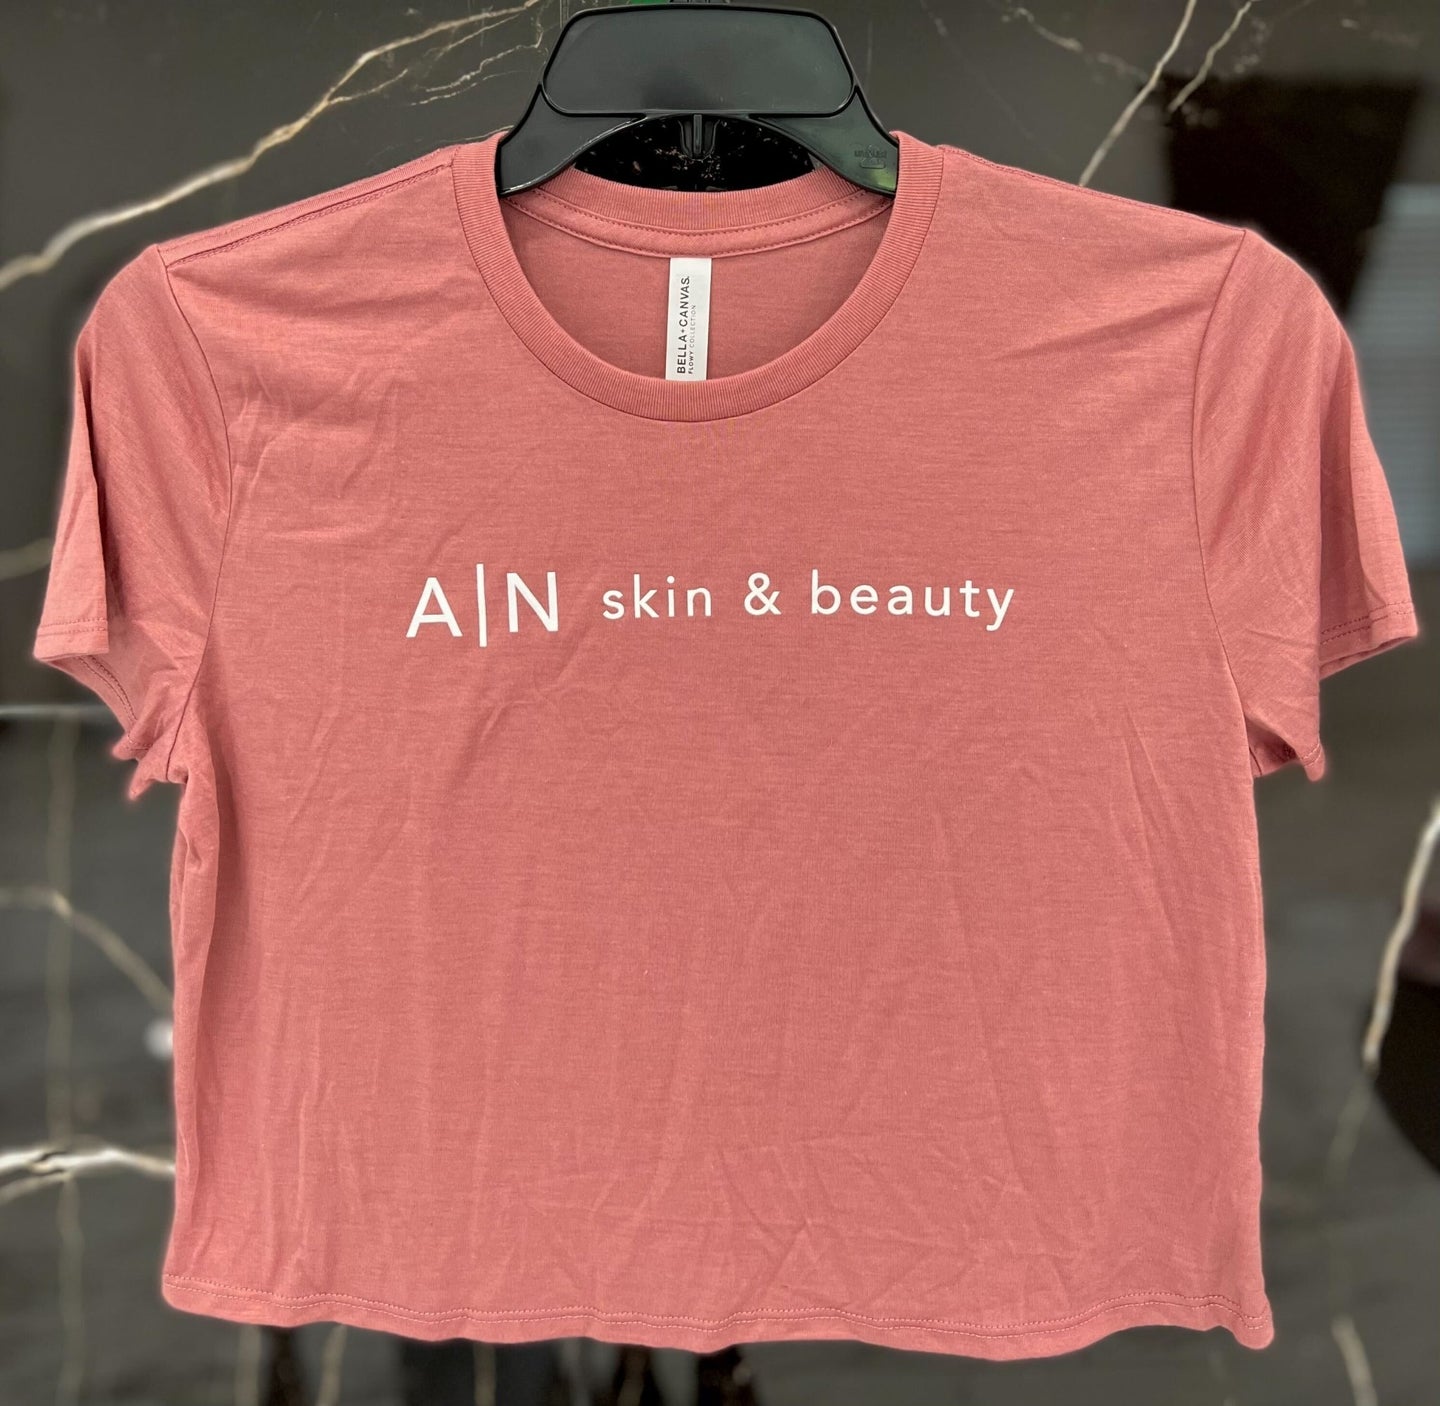 A|N Cropped T-Shirt - AN Skin & Beauty